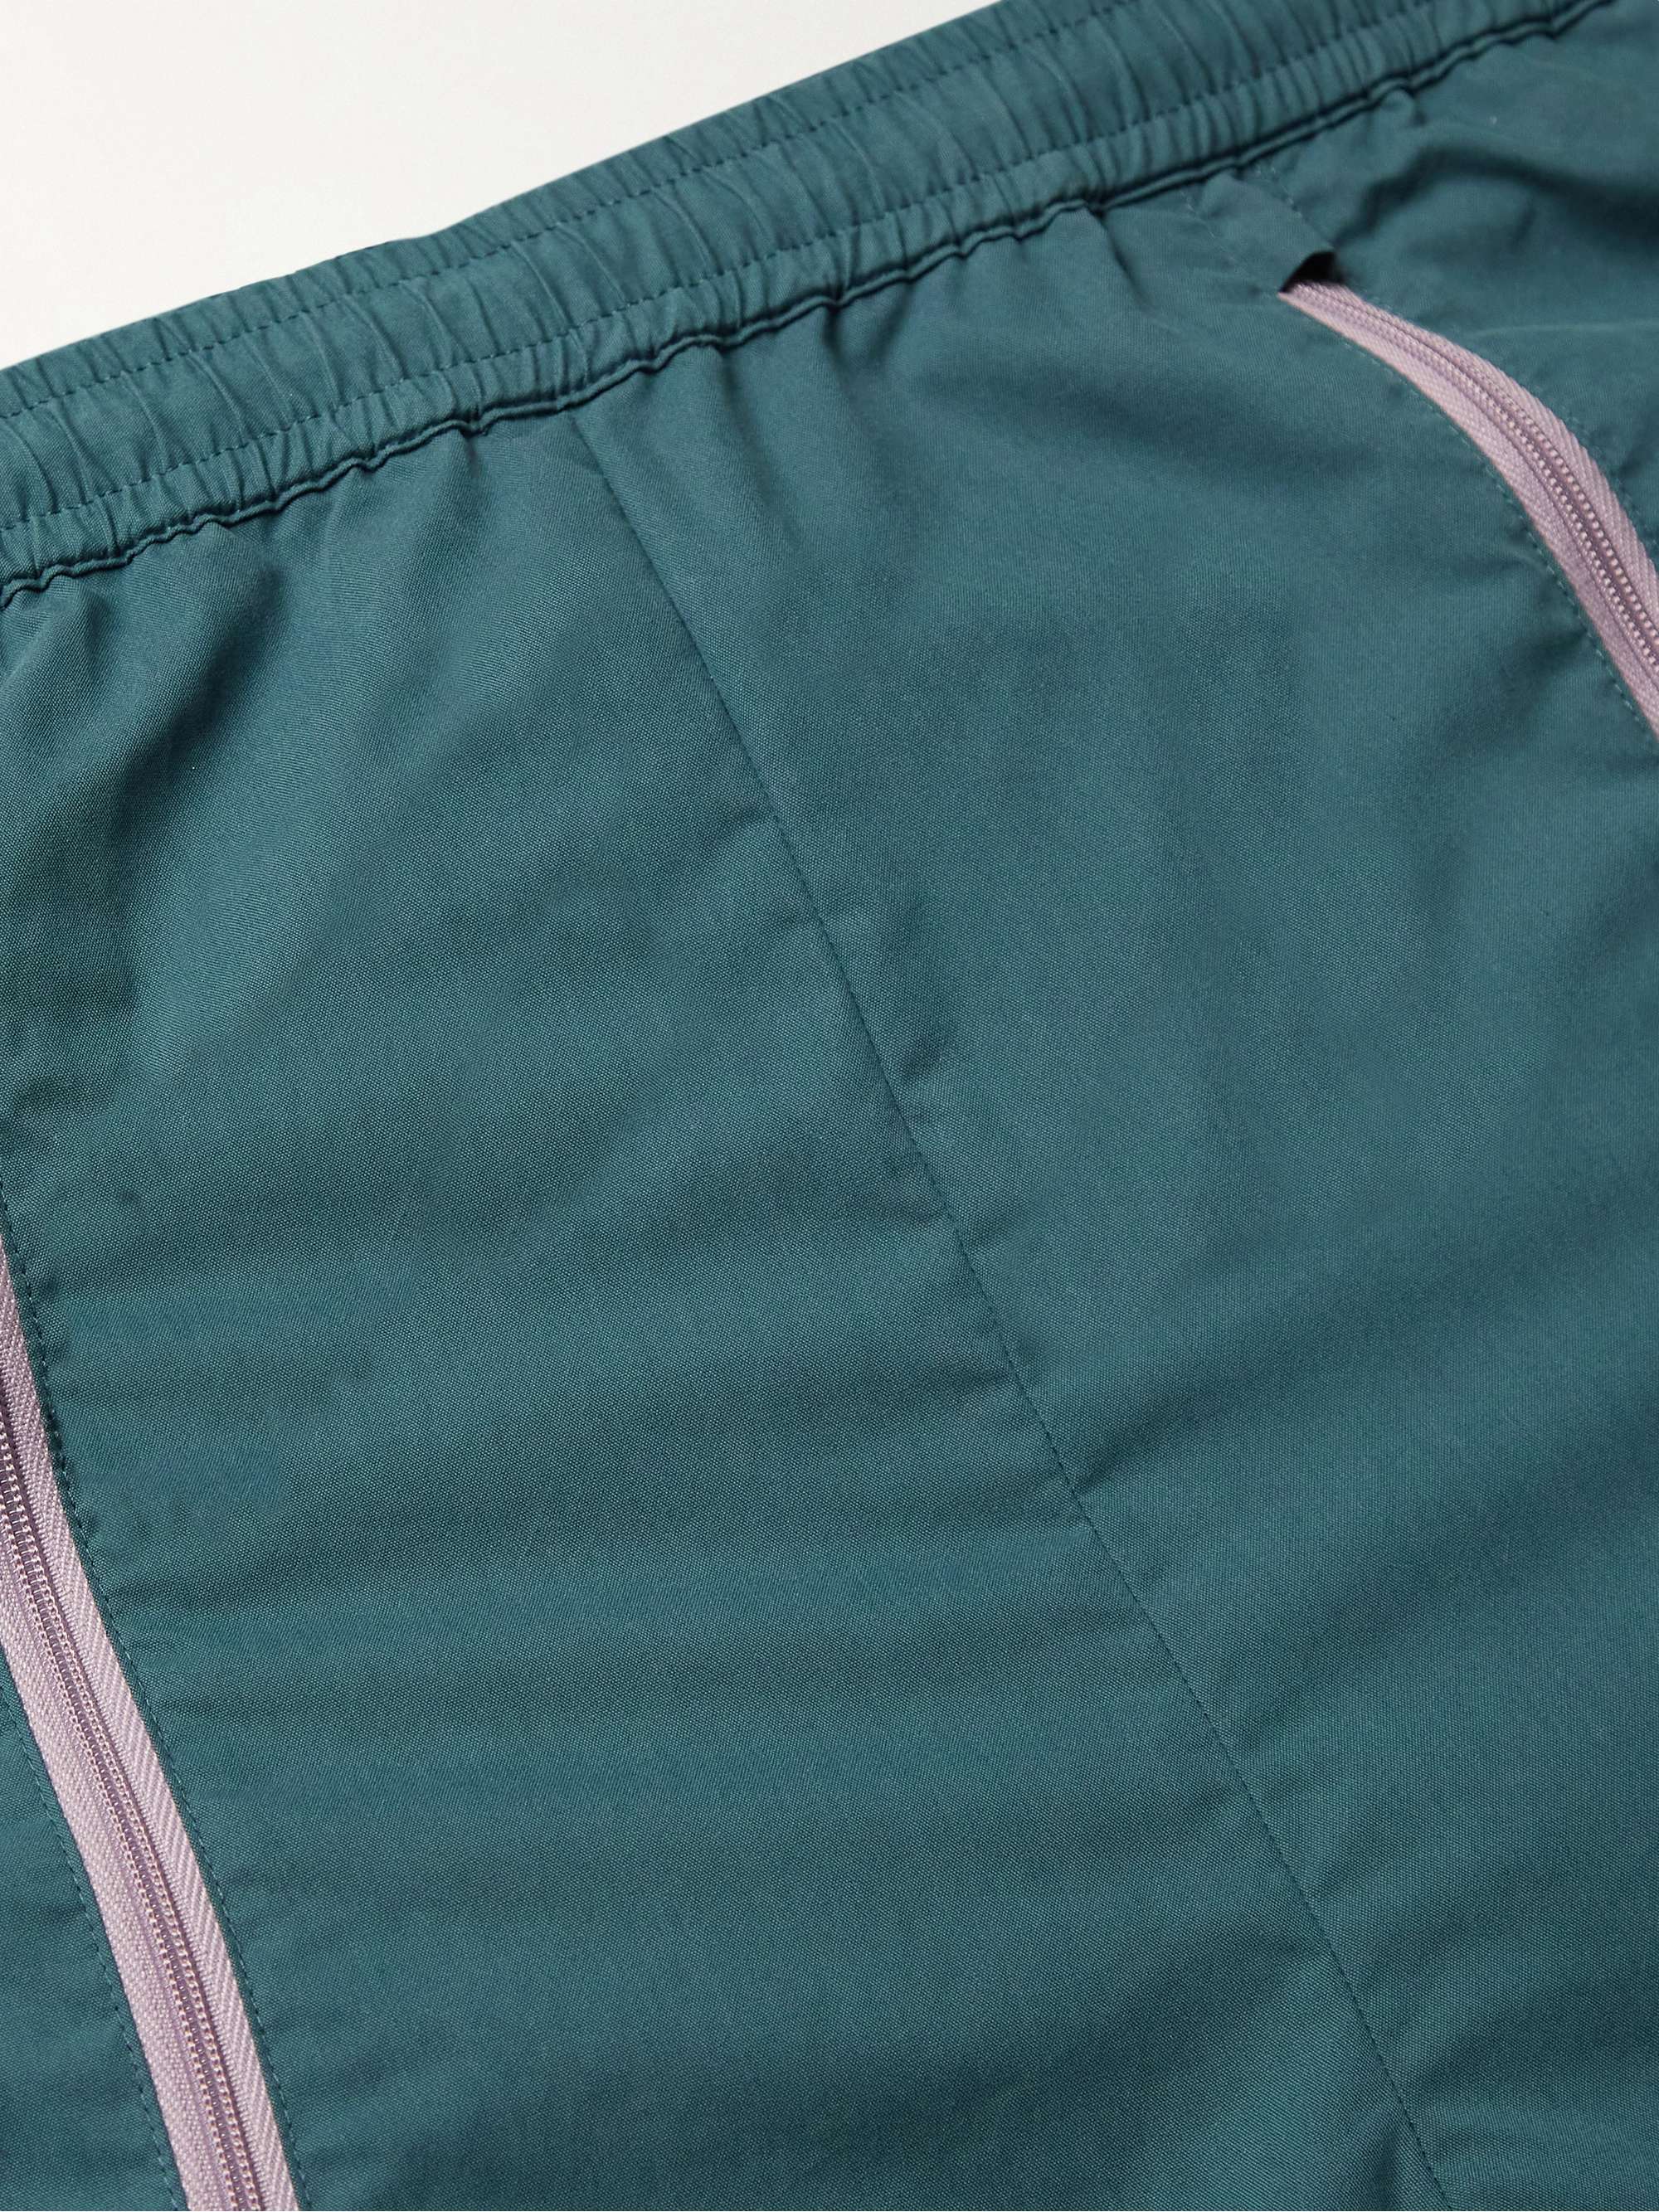 ACNE STUDIOS Cotton and Nylon-Blend Track Pants